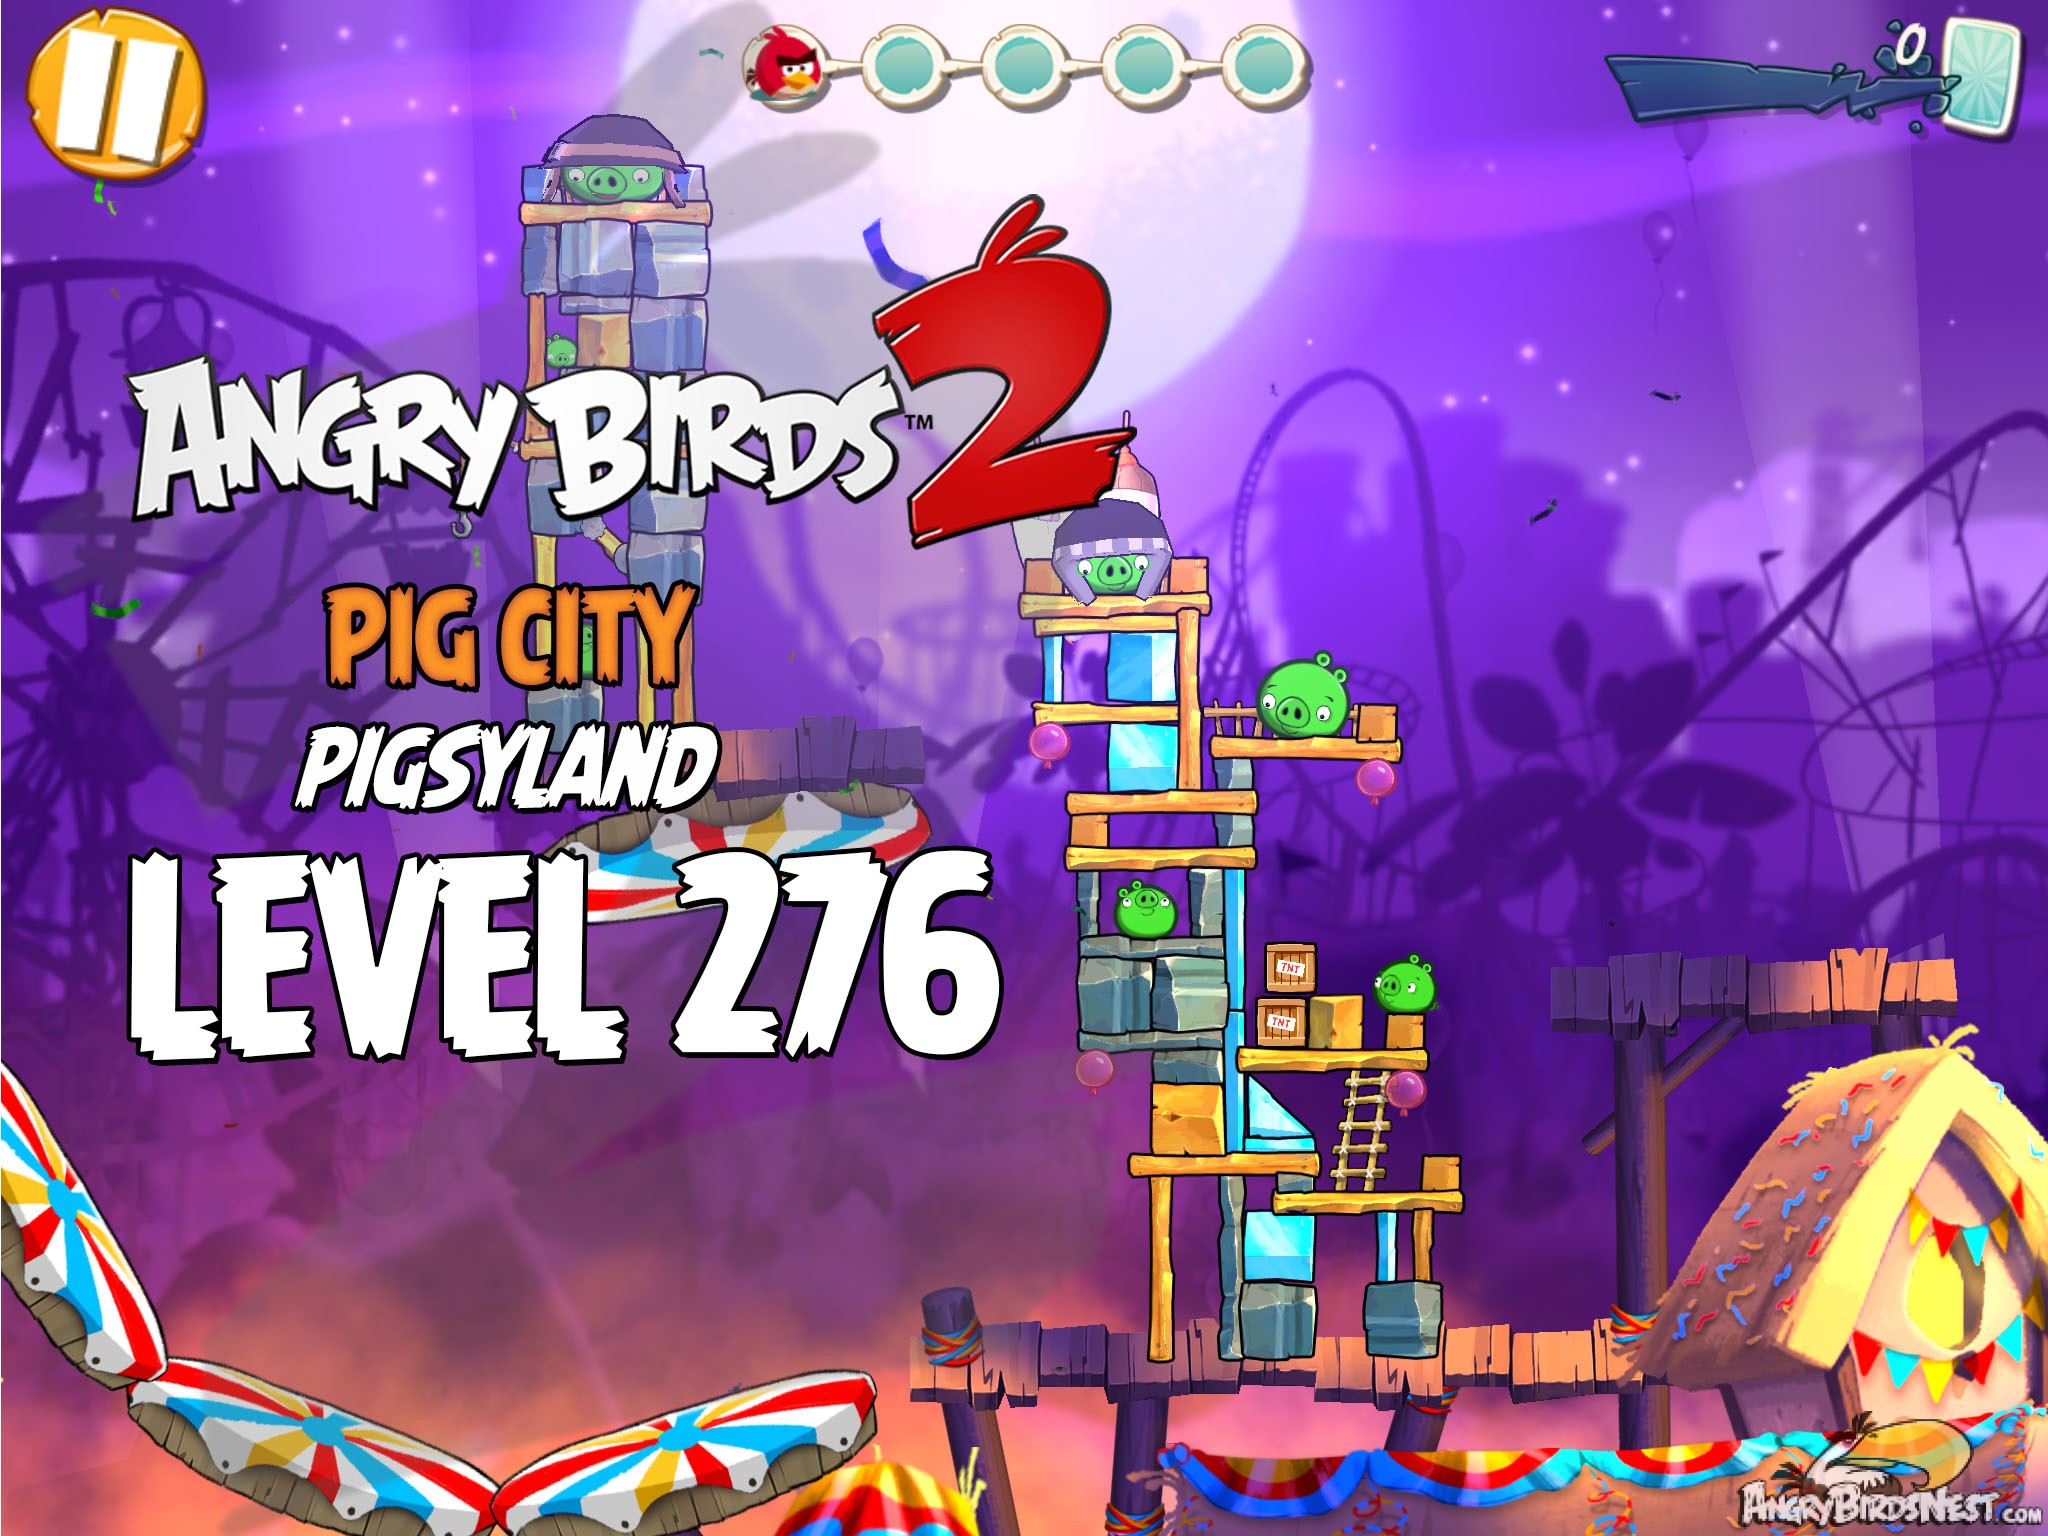 Angry Birds 2 Pig City Pigsyland Level 276